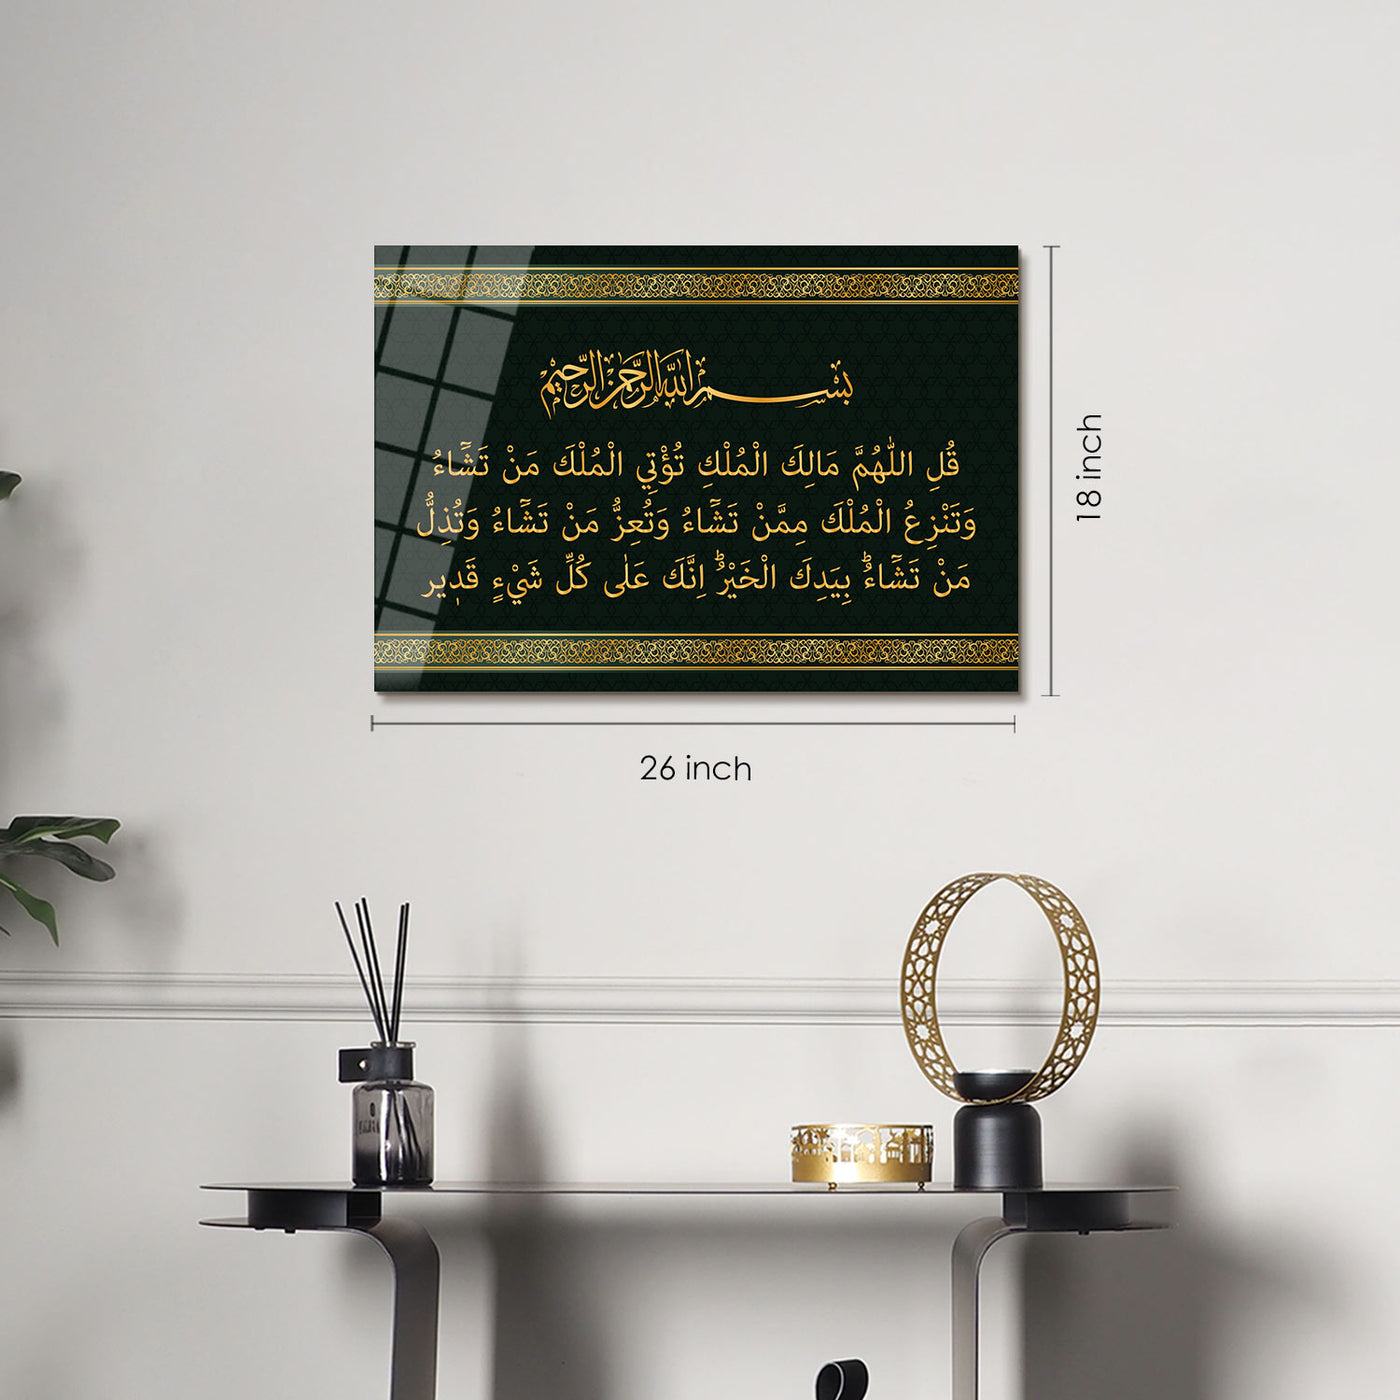 Surah Ali Imran Verse 26 Glass Islamic Wall Art - WTC030